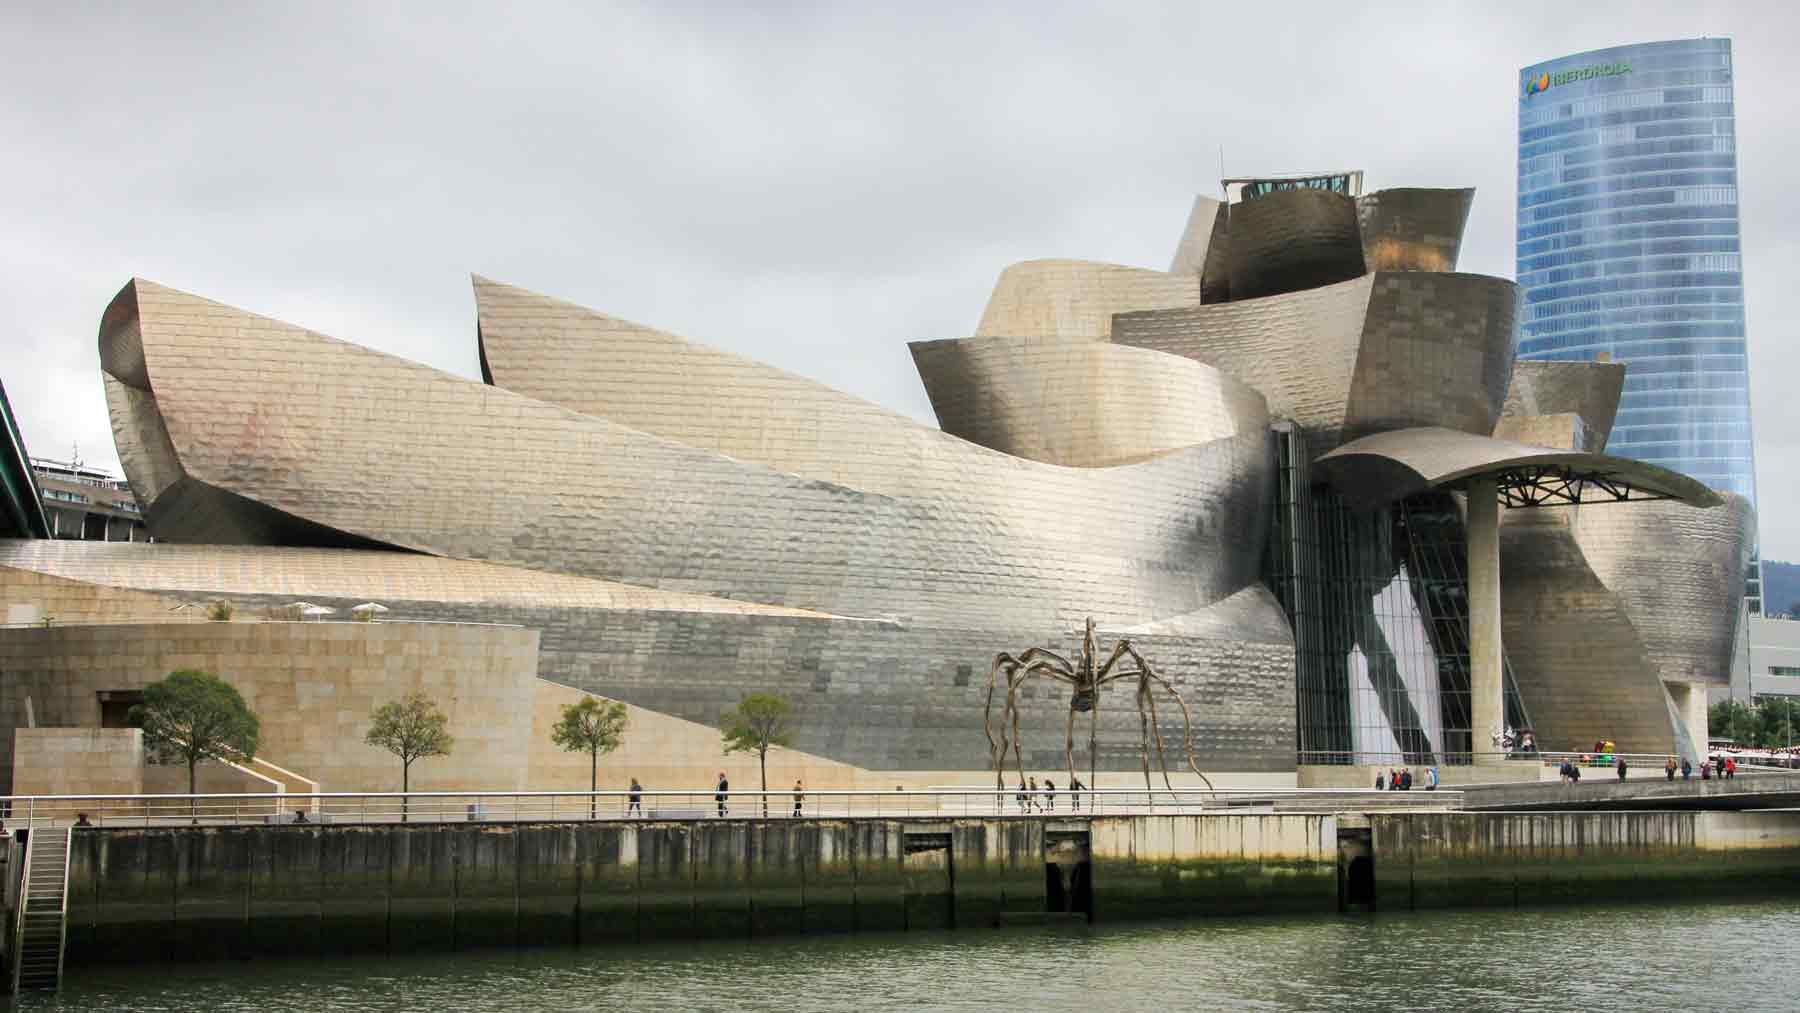 Guggenheim Bilbao from across the river